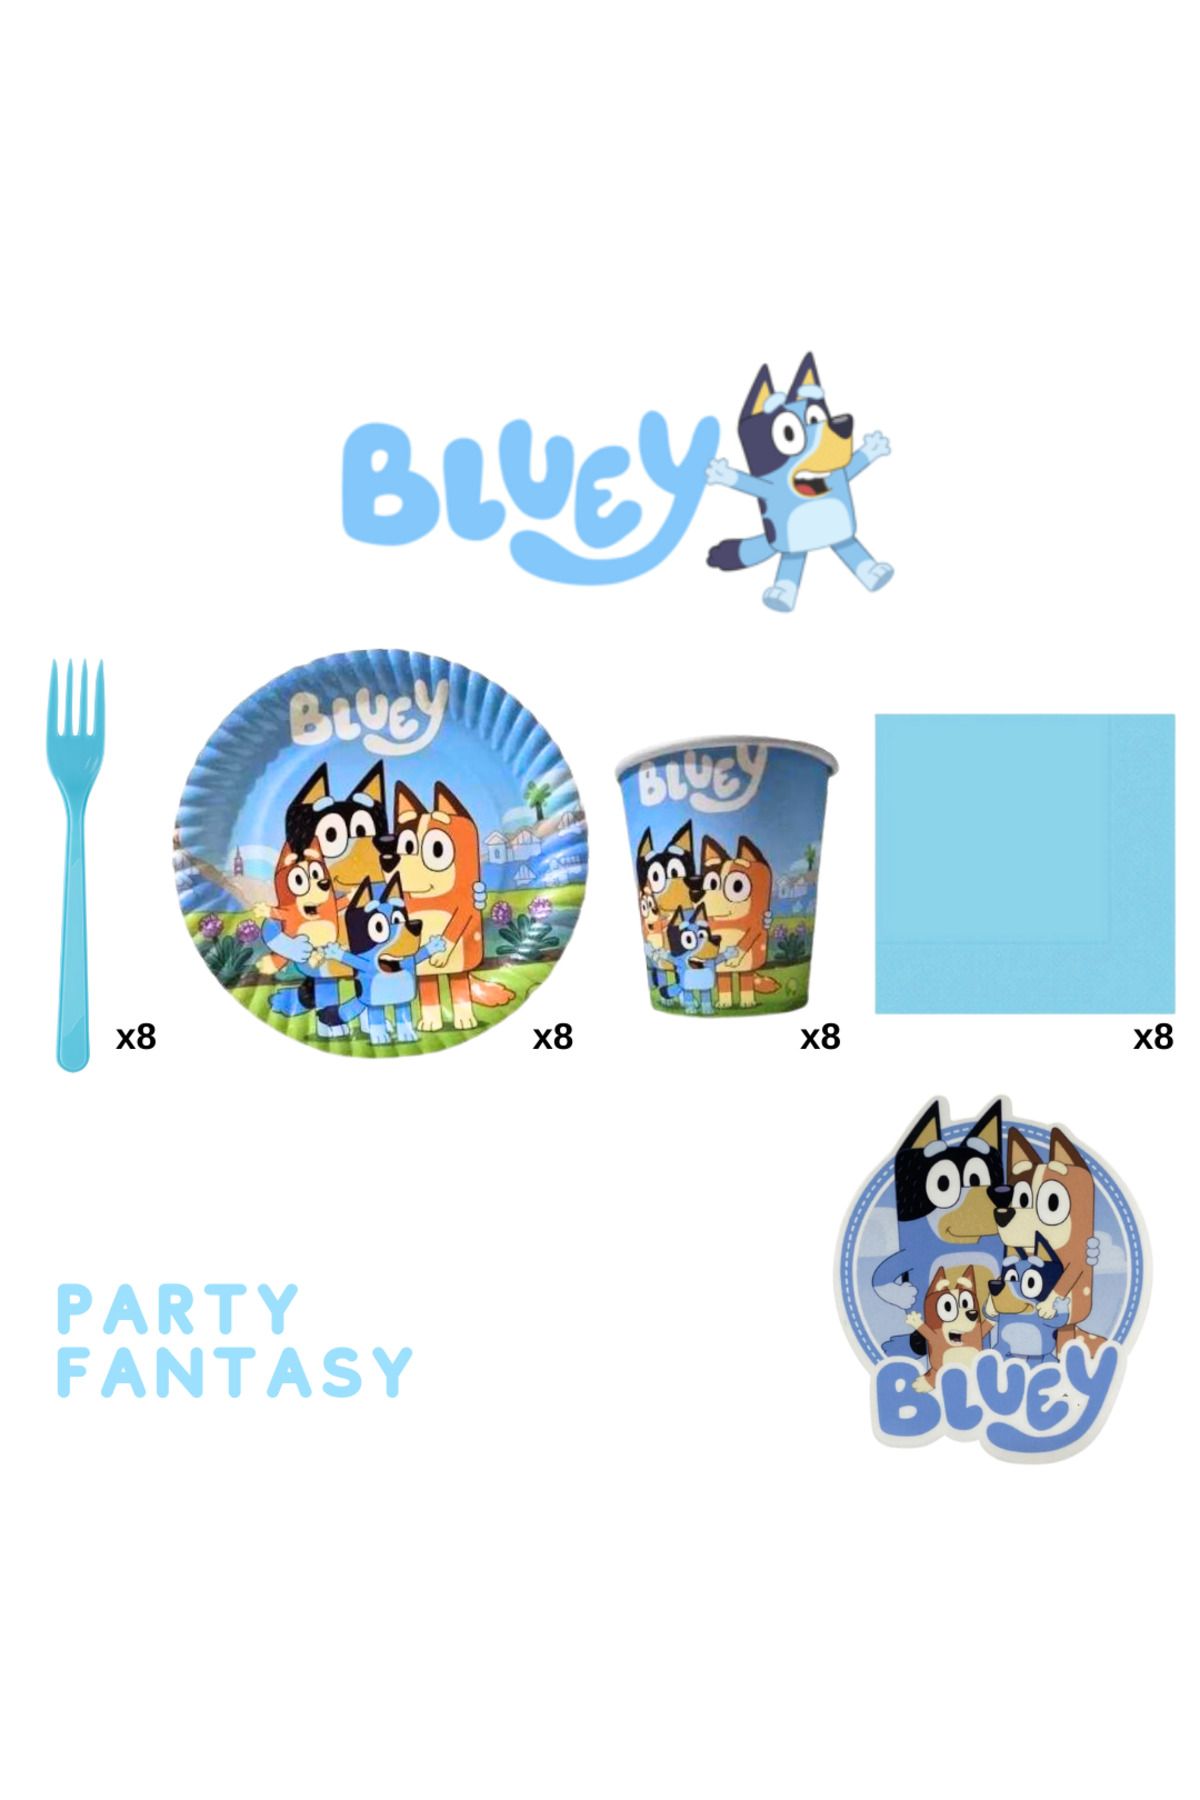 Party Fantasy Bluey 8 kişilik Yemek Seti Tabak Bardak Peçete ve Çatal Bluey Servis Seti Bluey Parti Set